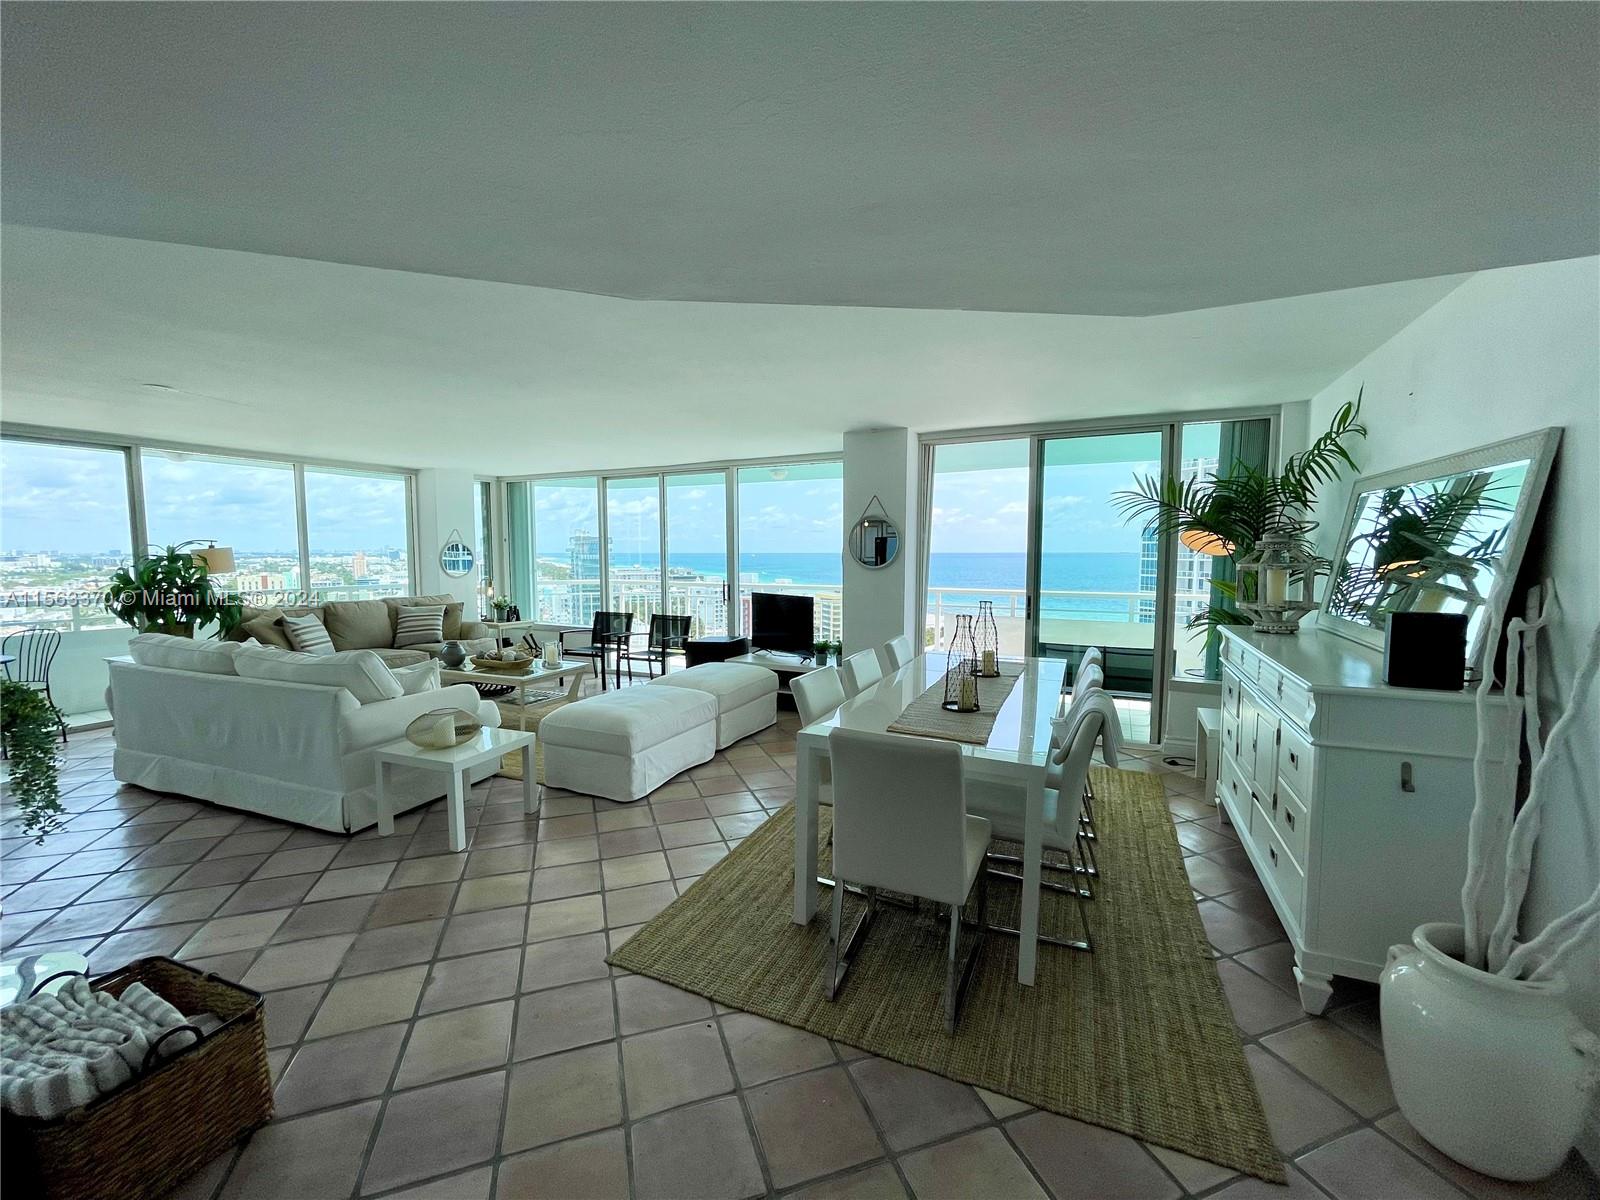 Property for Sale at 400 S Pointe Dr 2010, Miami Beach, Miami-Dade County, Florida - Bedrooms: 2 
Bathrooms: 2  - $1,975,000